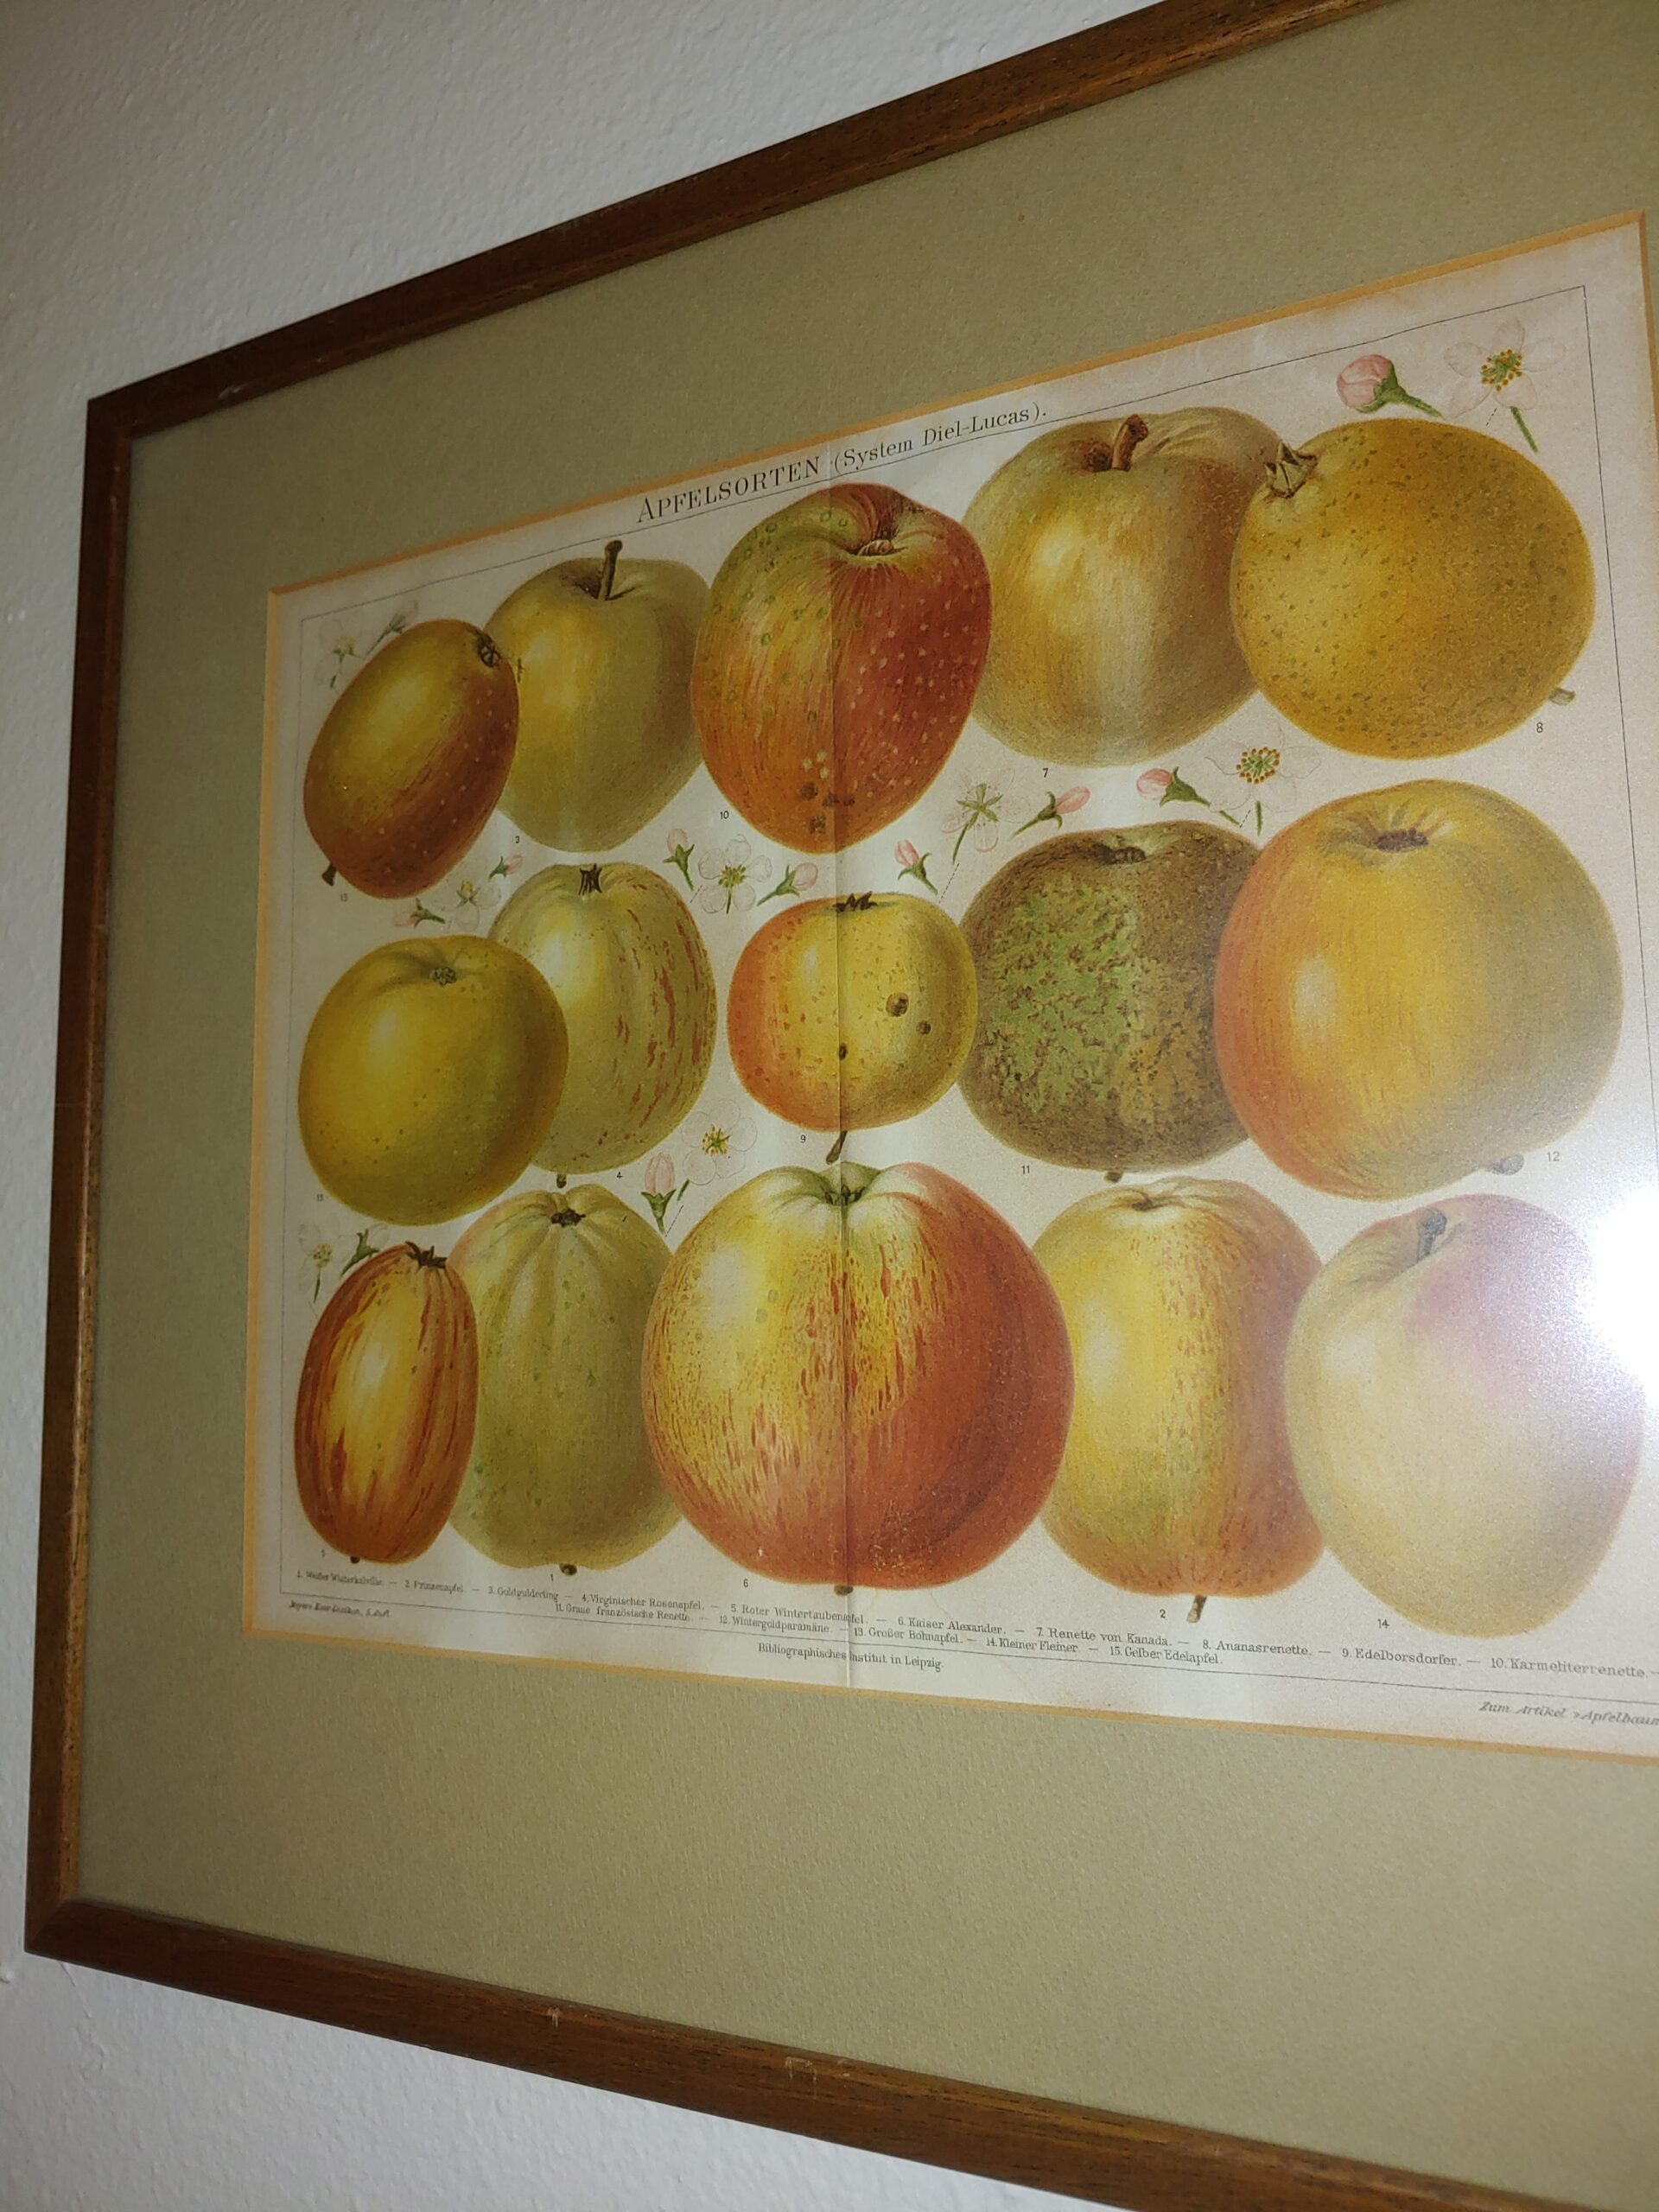 Julian Natural History Museum presents Apples Photo